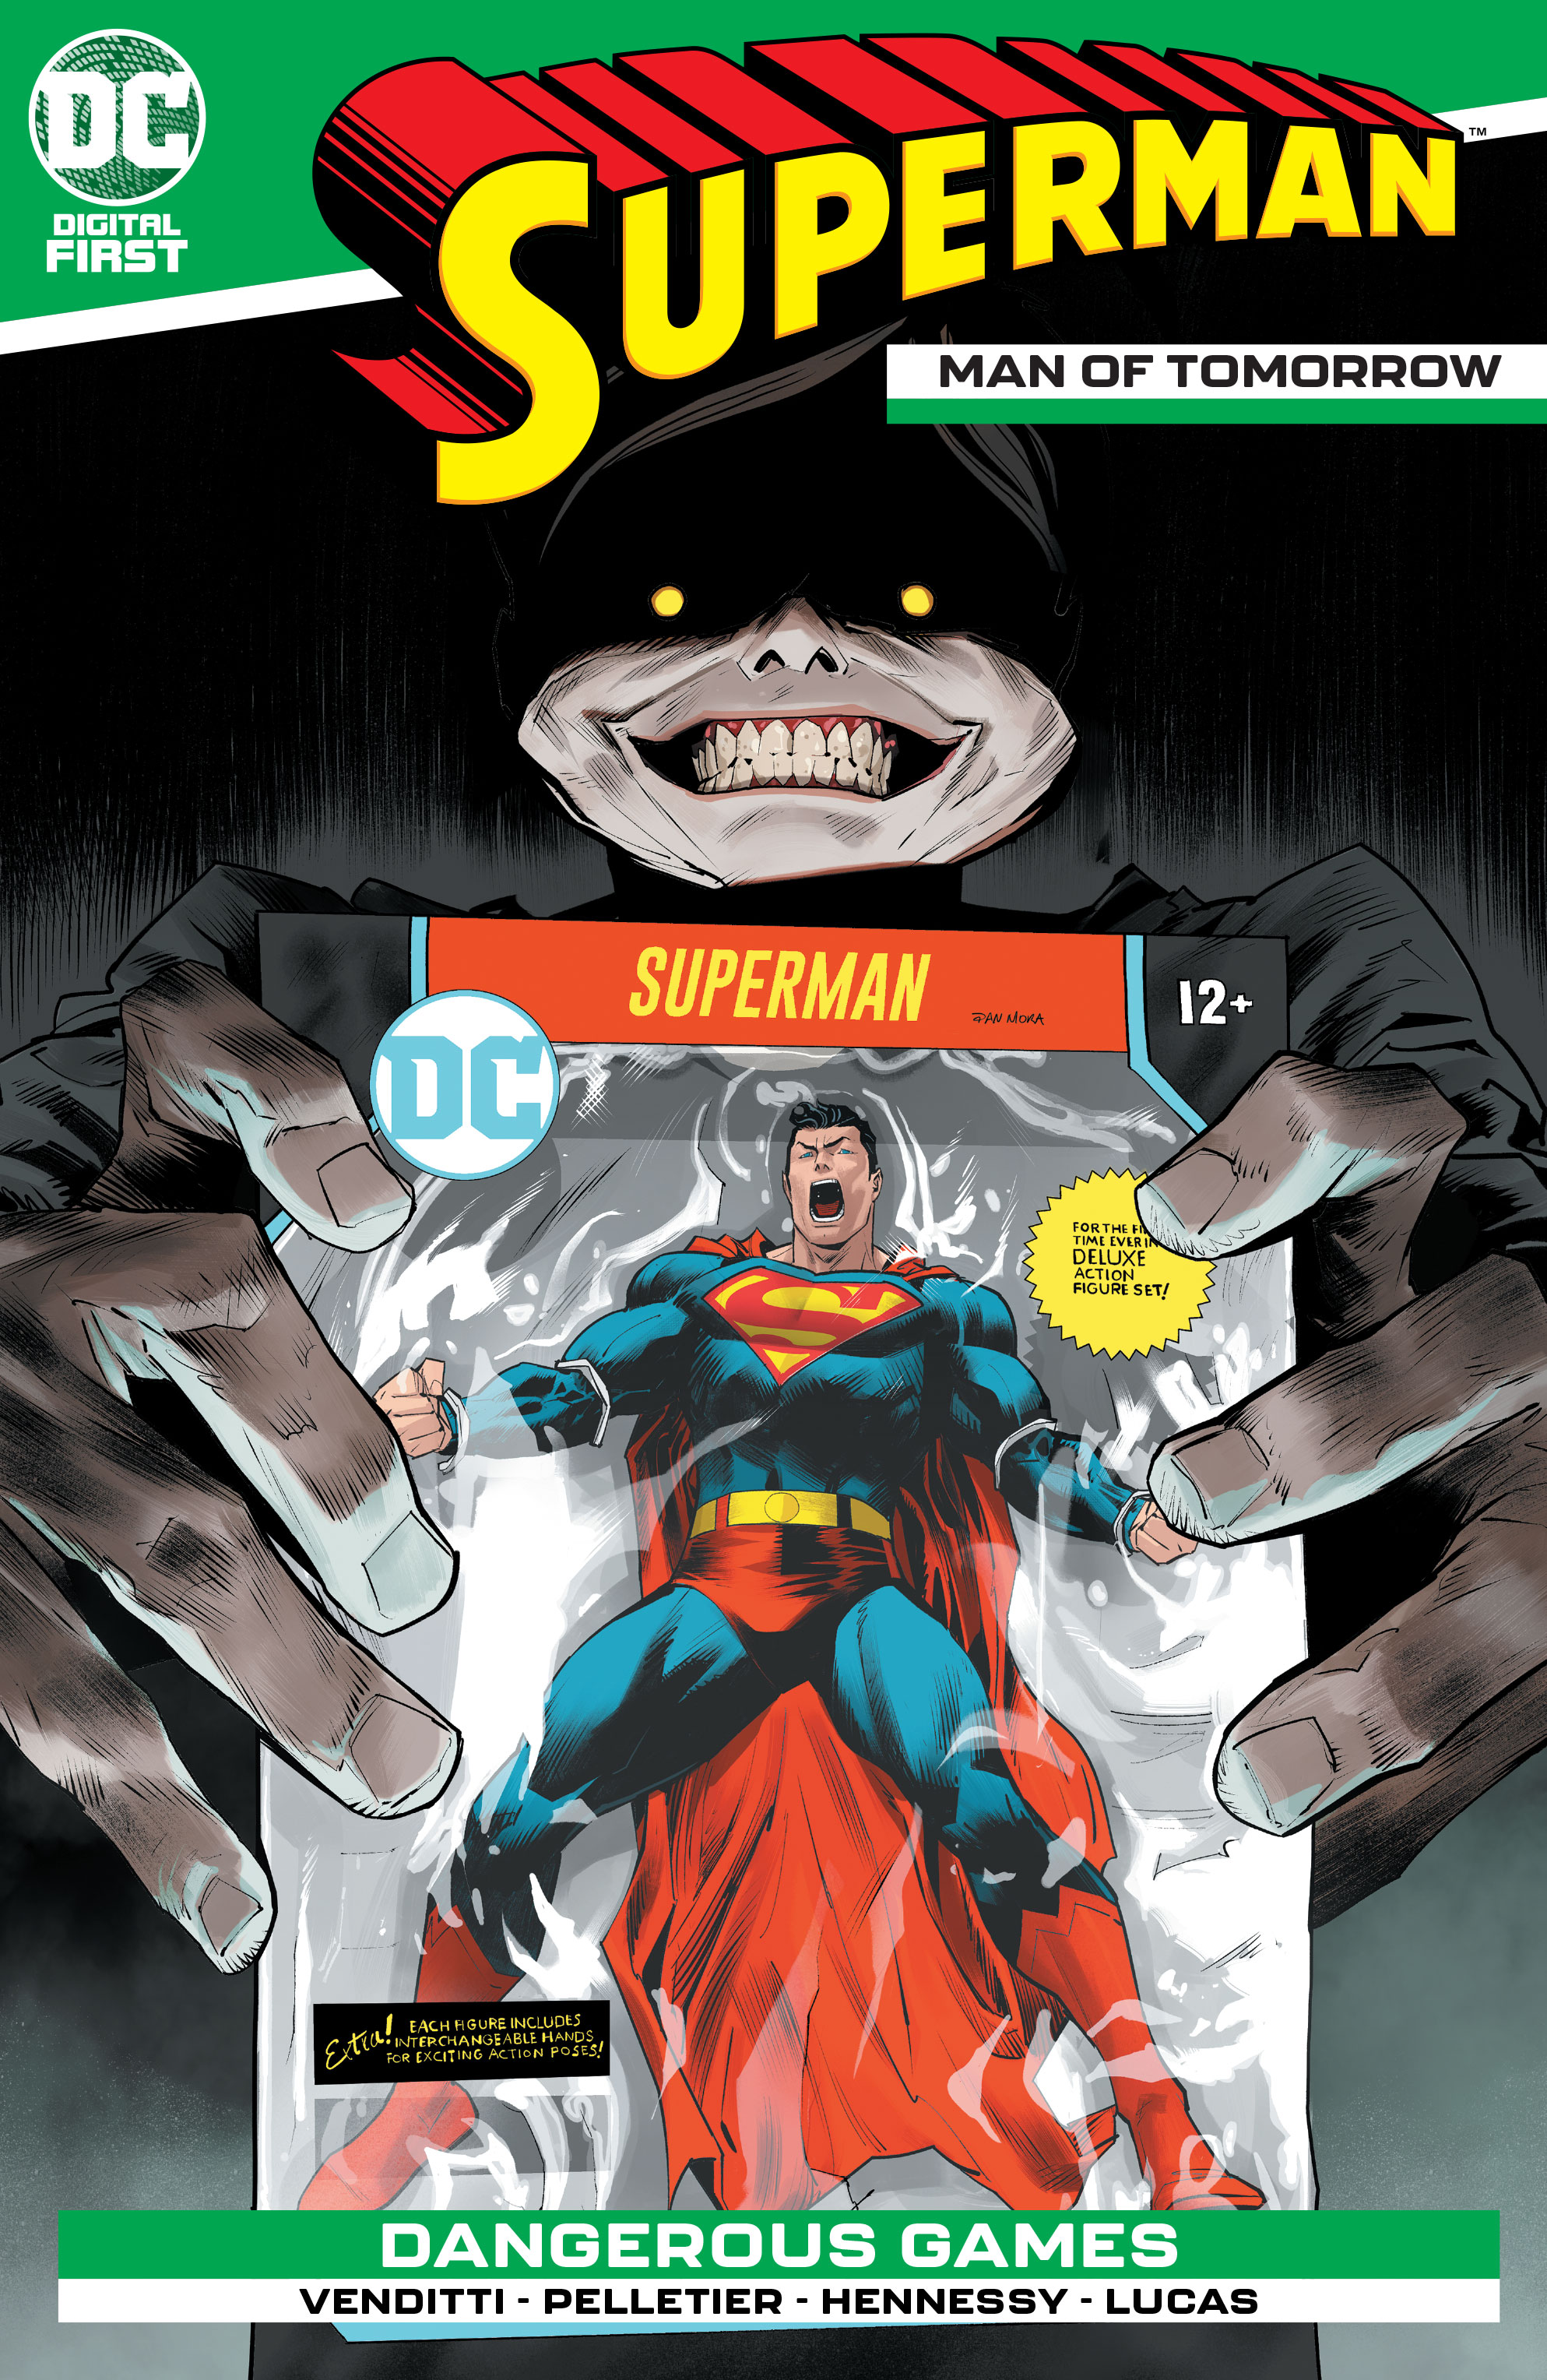 SUPERMAN-THE-MAN-OF-TOMORROW-Cv3